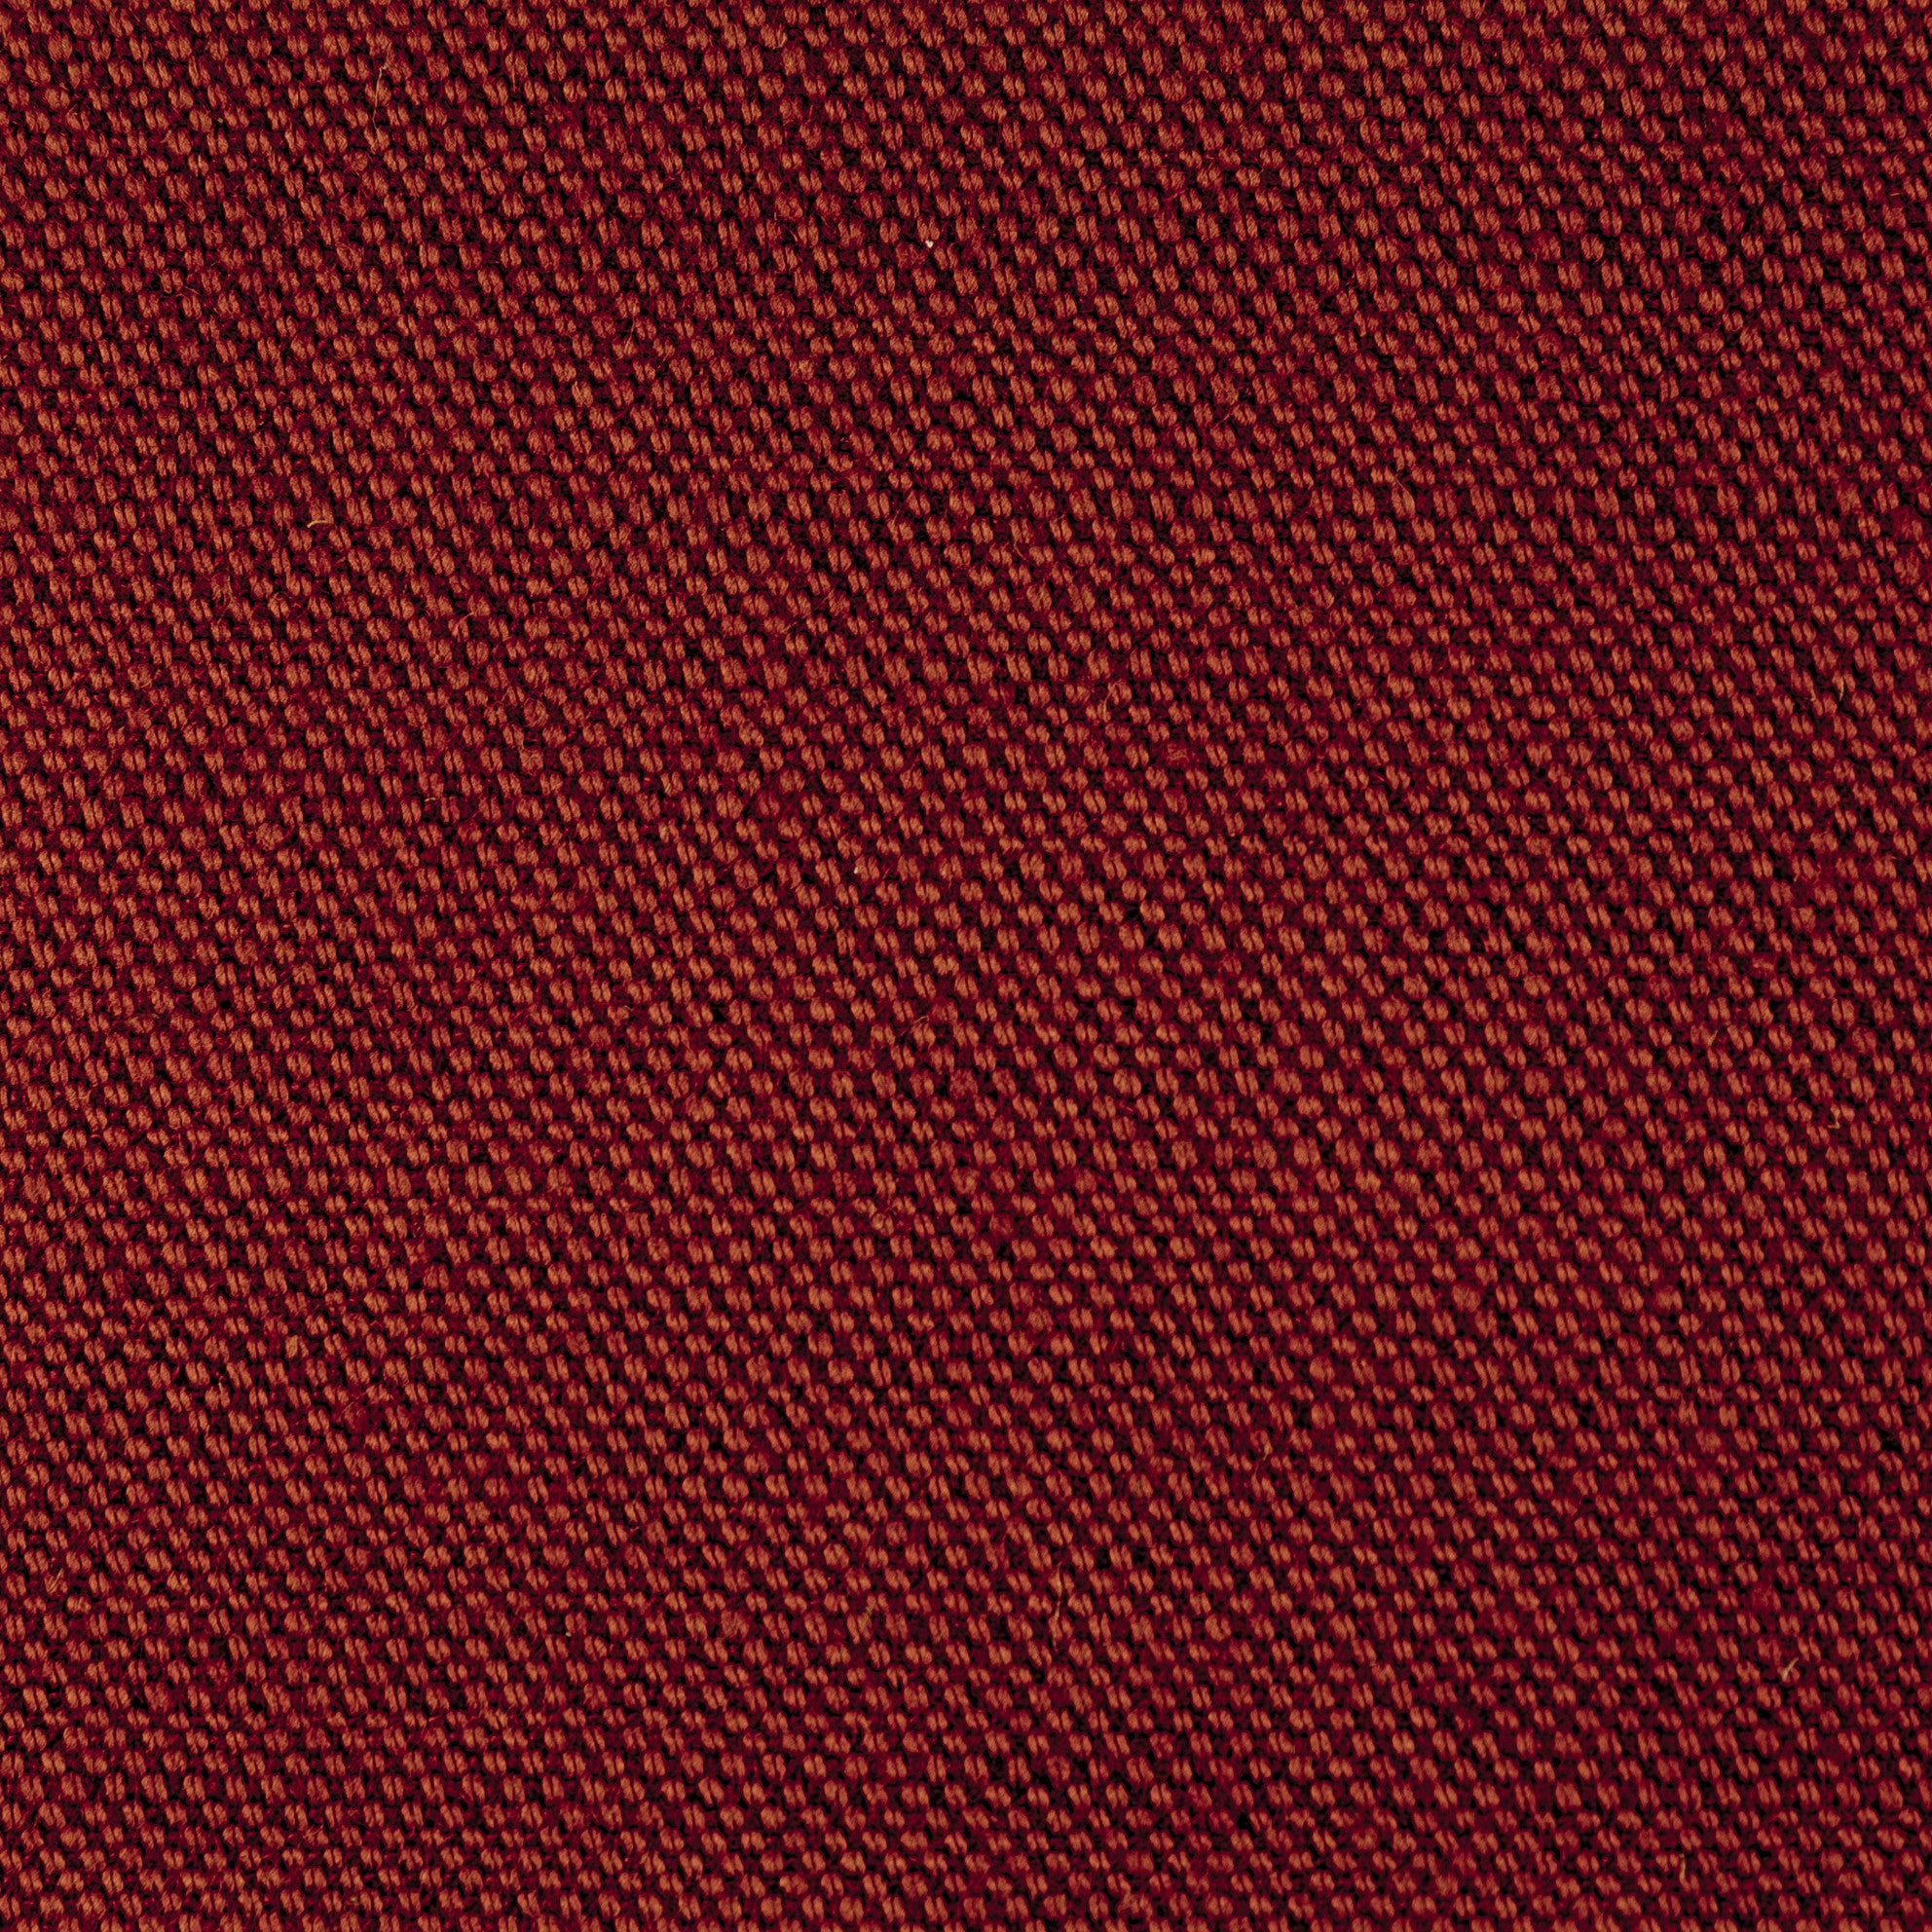 Woven Plain Fabric - Lynton 11/100 Piri Piri | Nicholas Engert Interiors